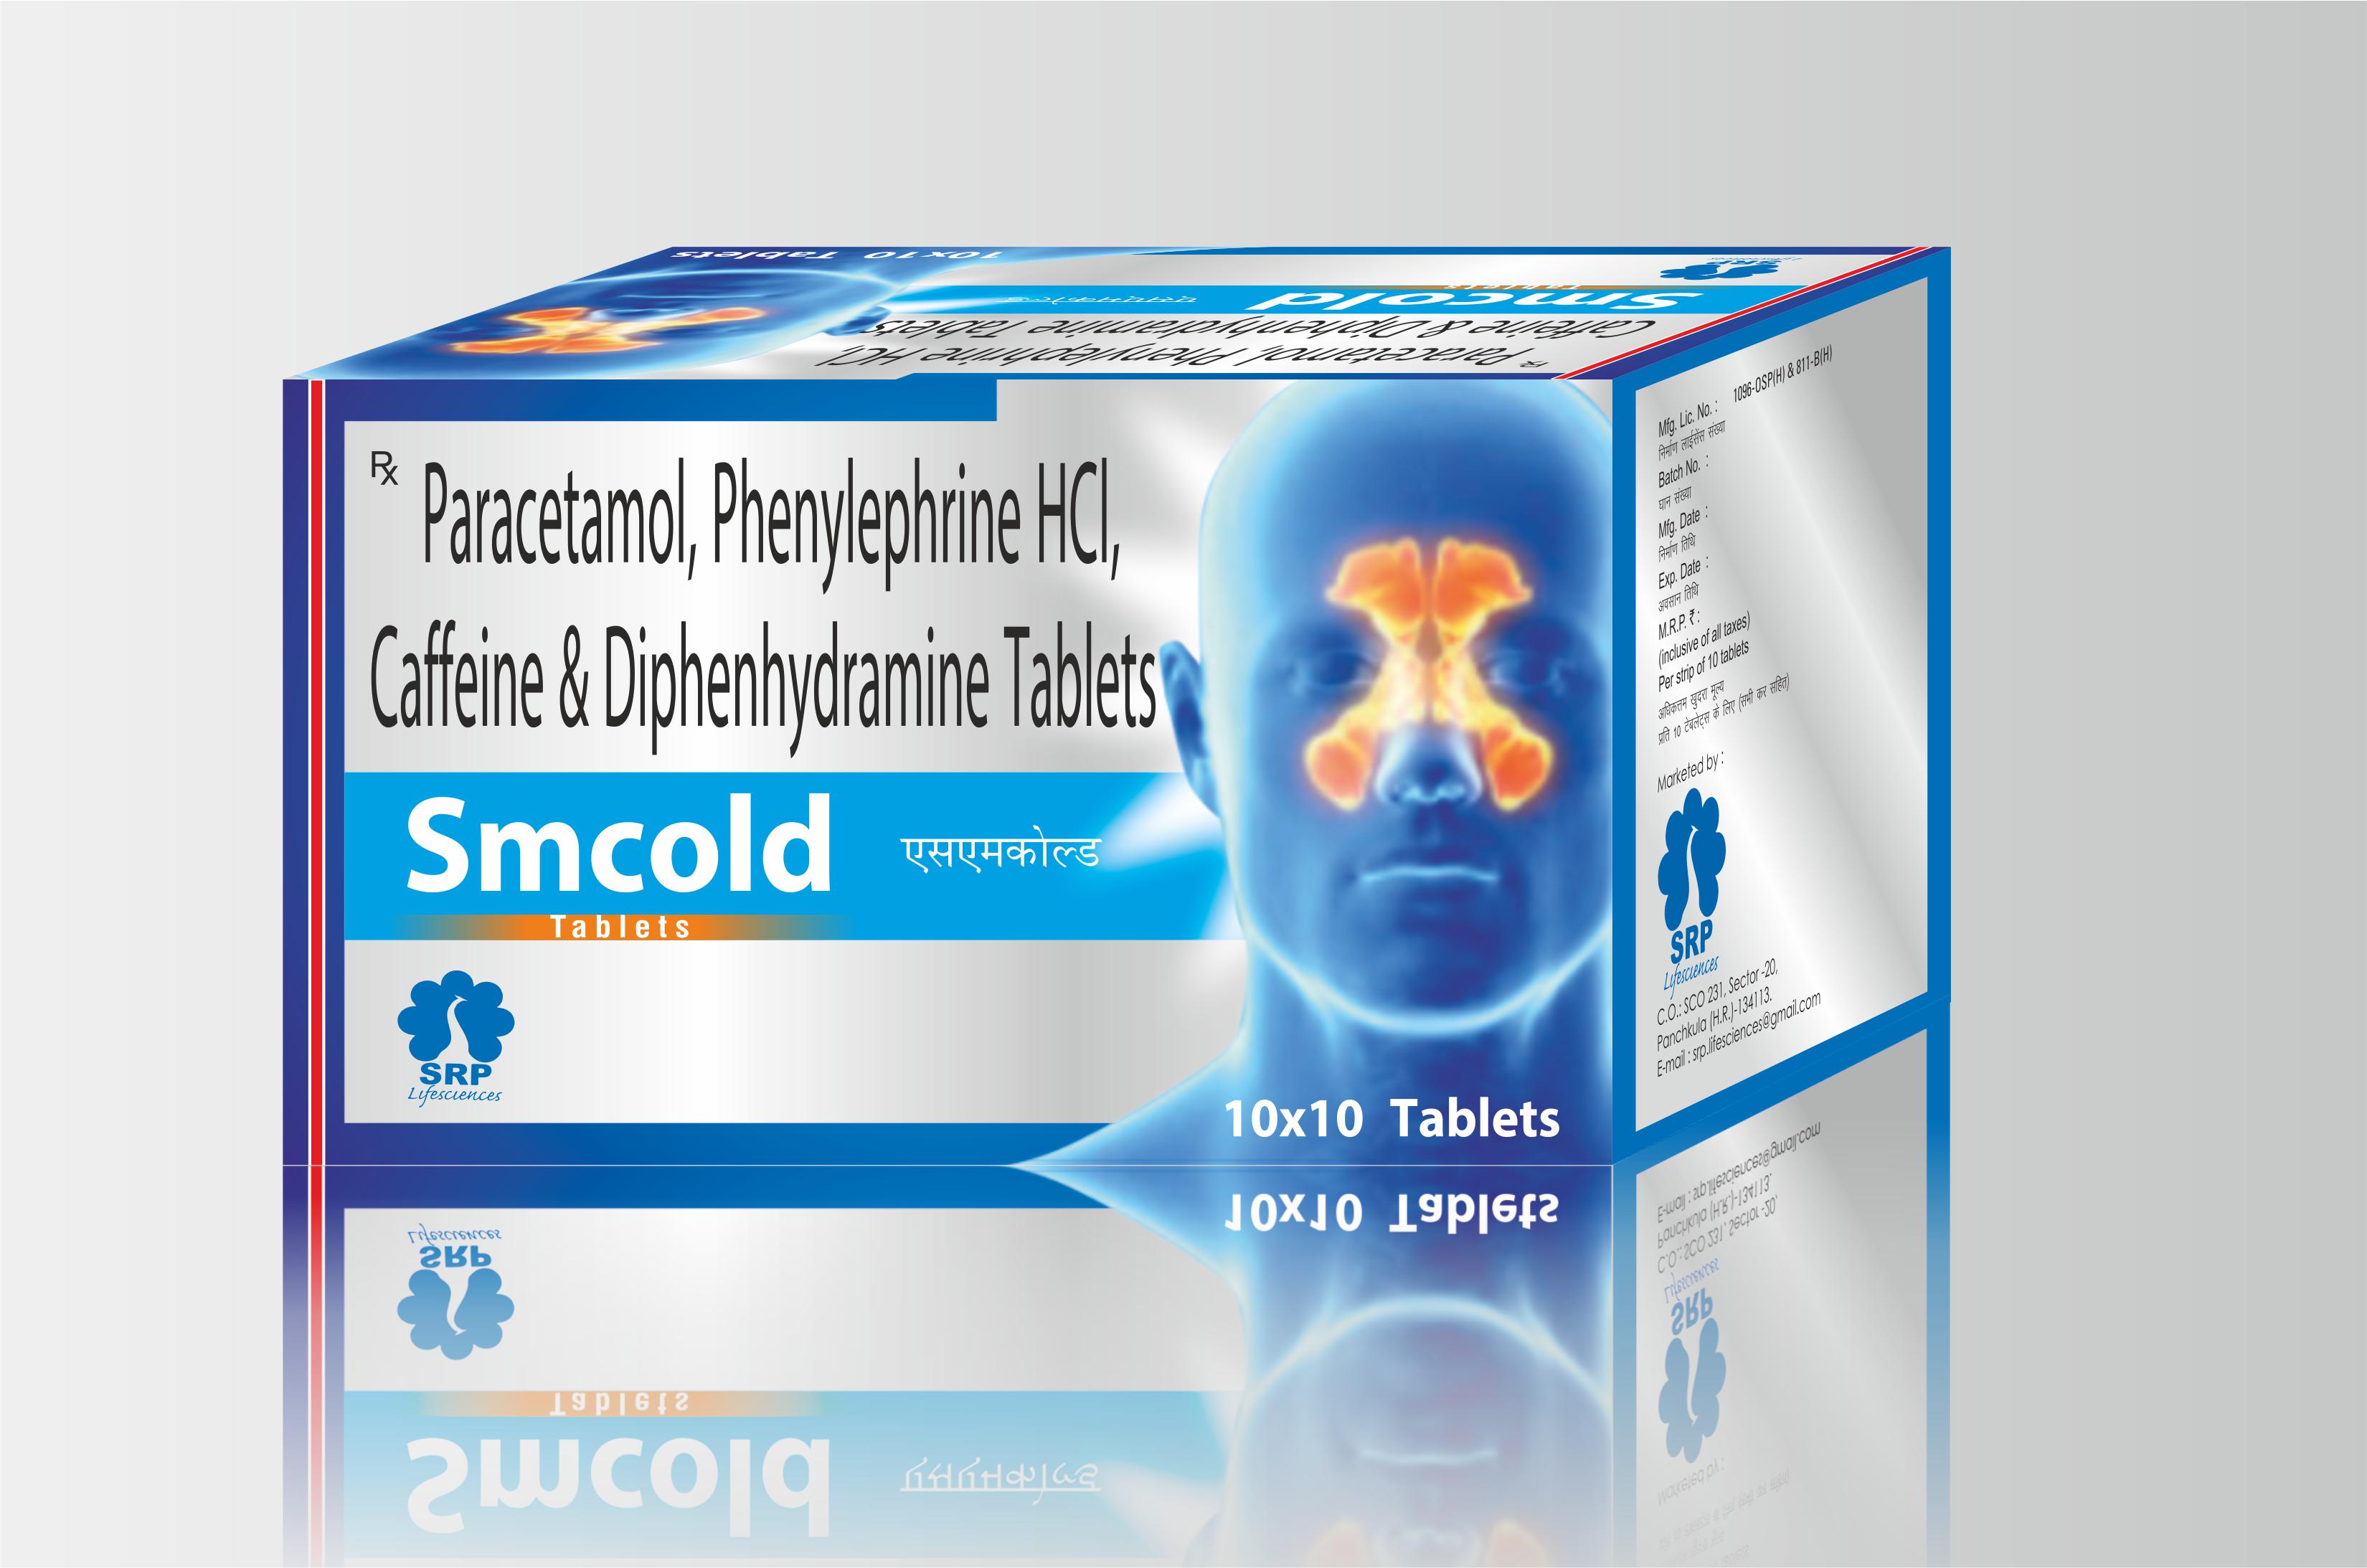 SMCOLD are Paracetamol, Phenylephrine Hcl, Caffeine & Diphenhydramine Tablets - Cynak Healthcare